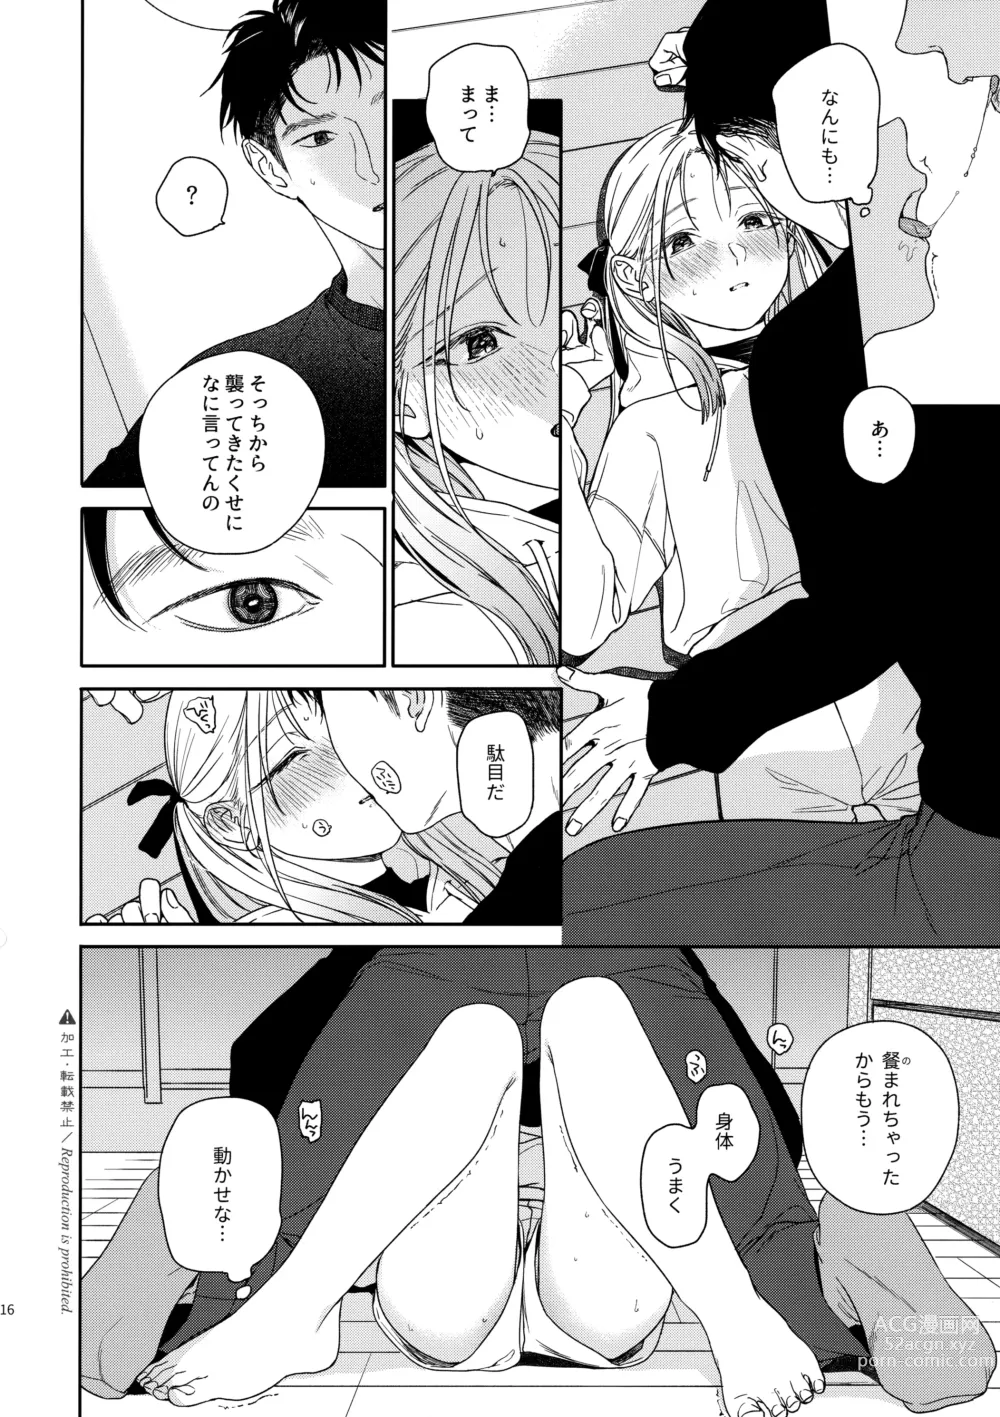 Page 15 of doujinshi Katami to Getsumei